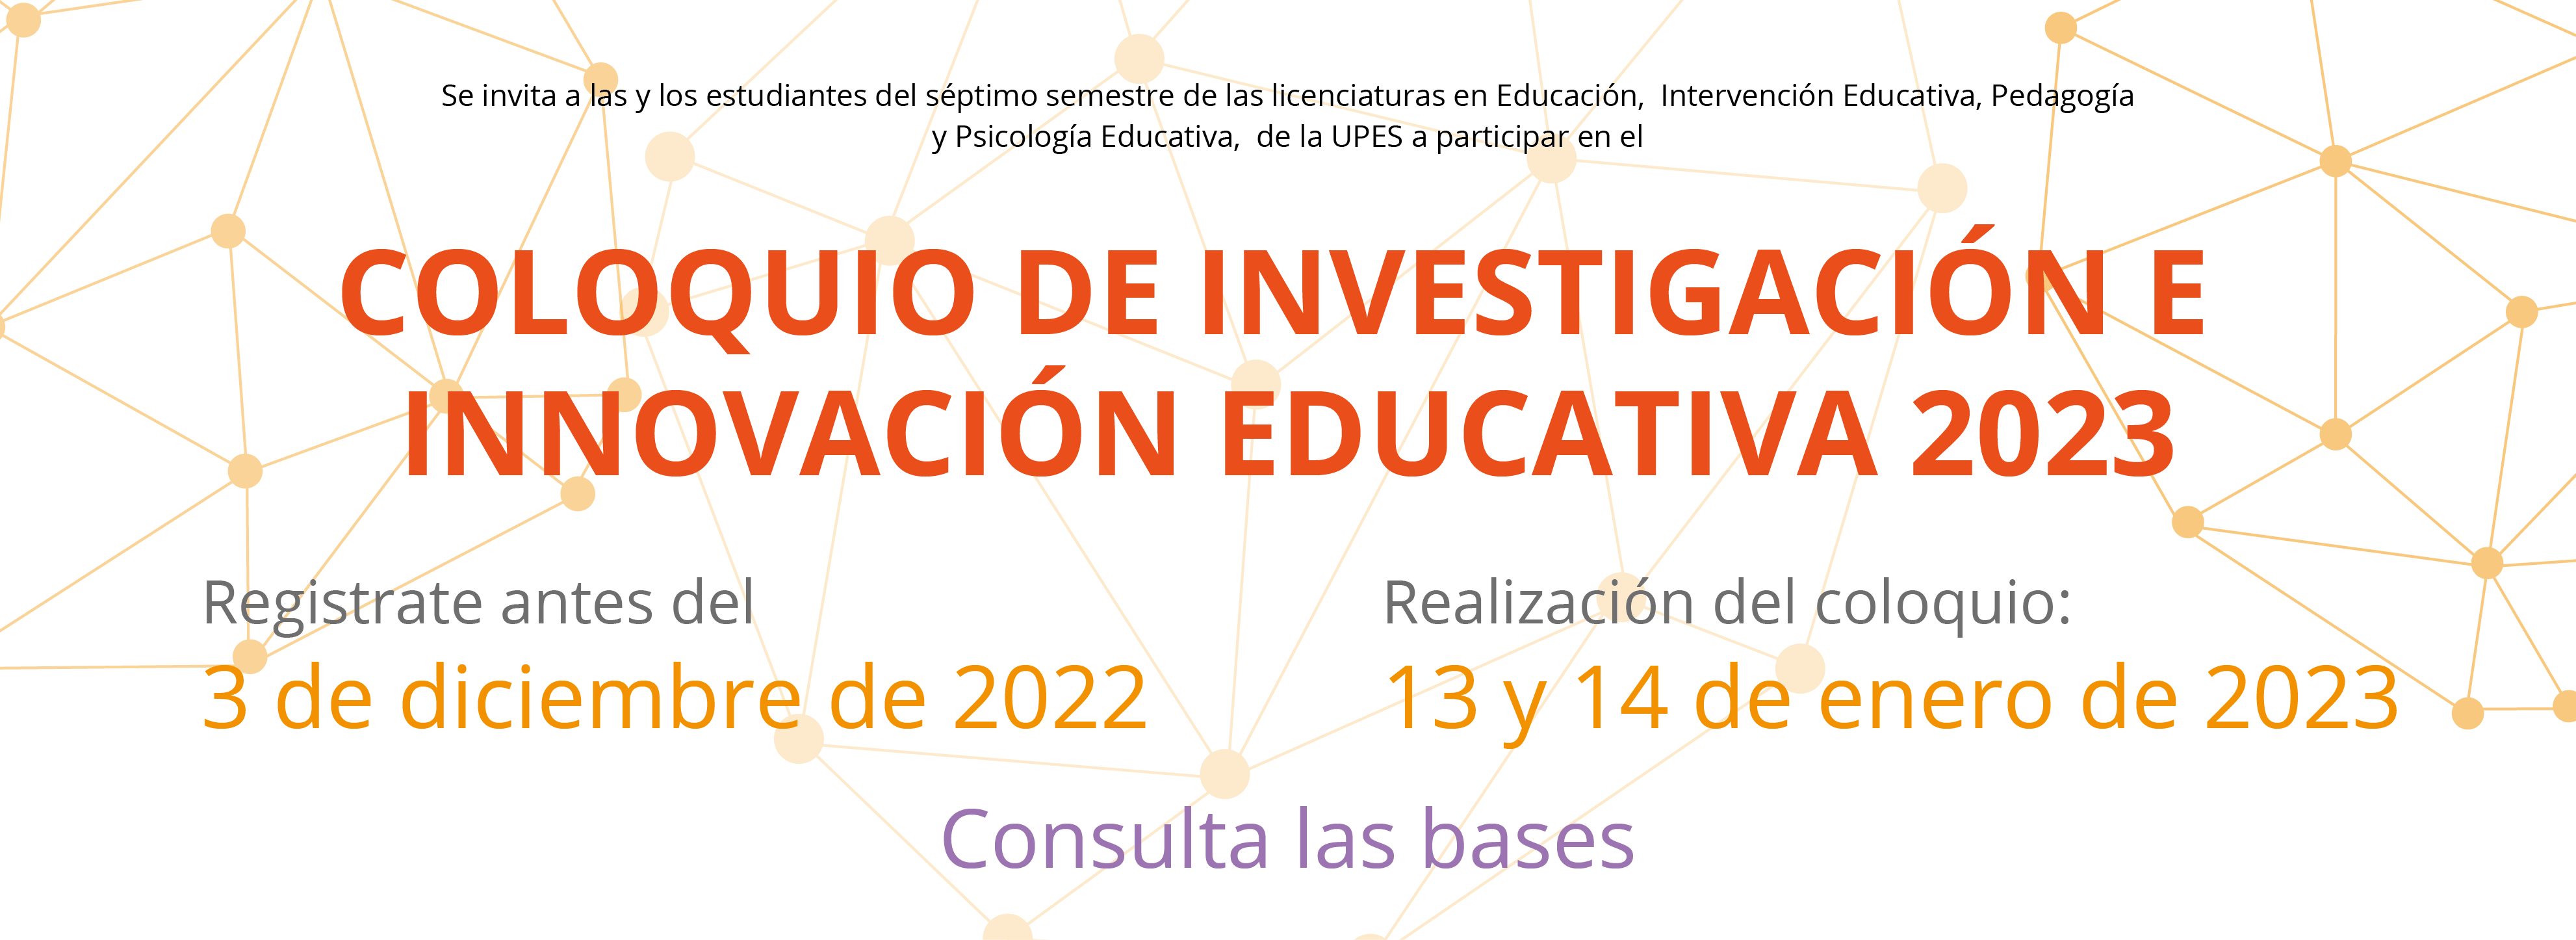 Convocatoria_Coloquio_de_Investigacion_e_Innovacion_Educativa_2023_banner_web_1